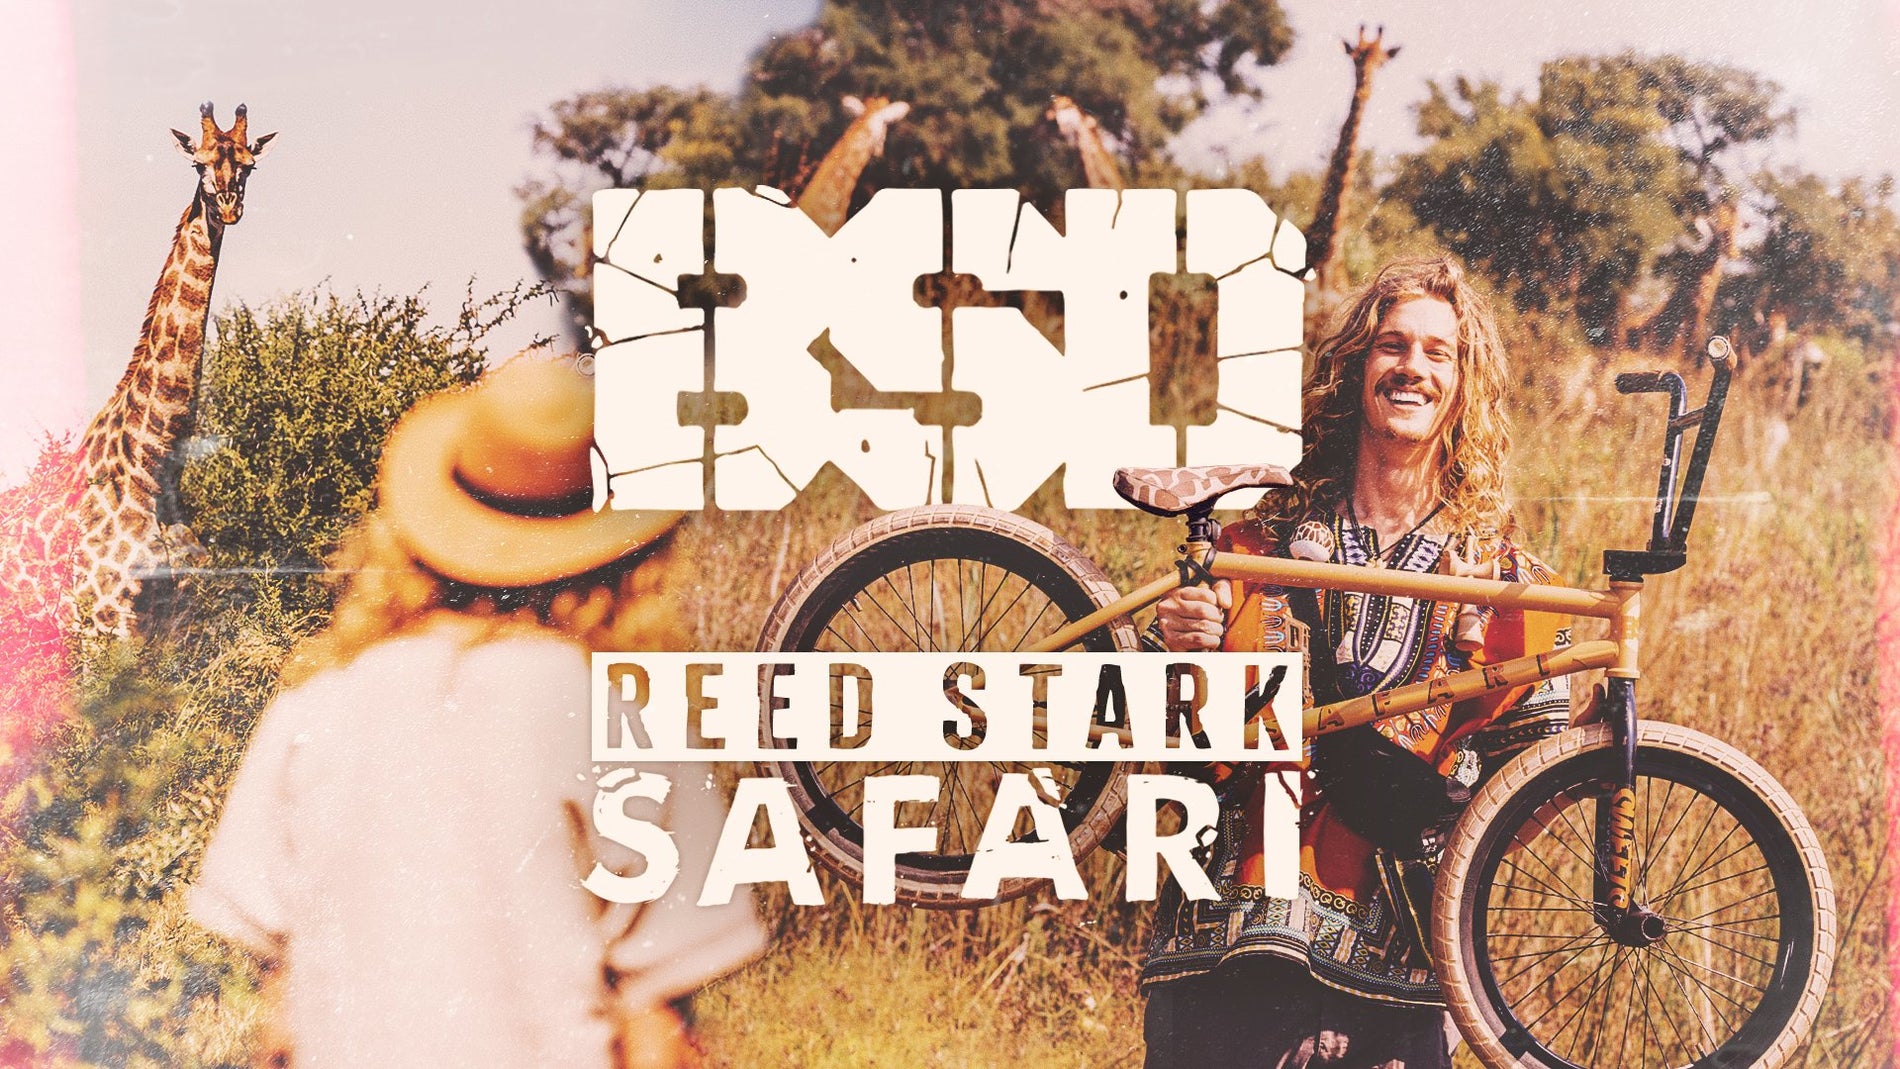 Reed Stark - SAFARI